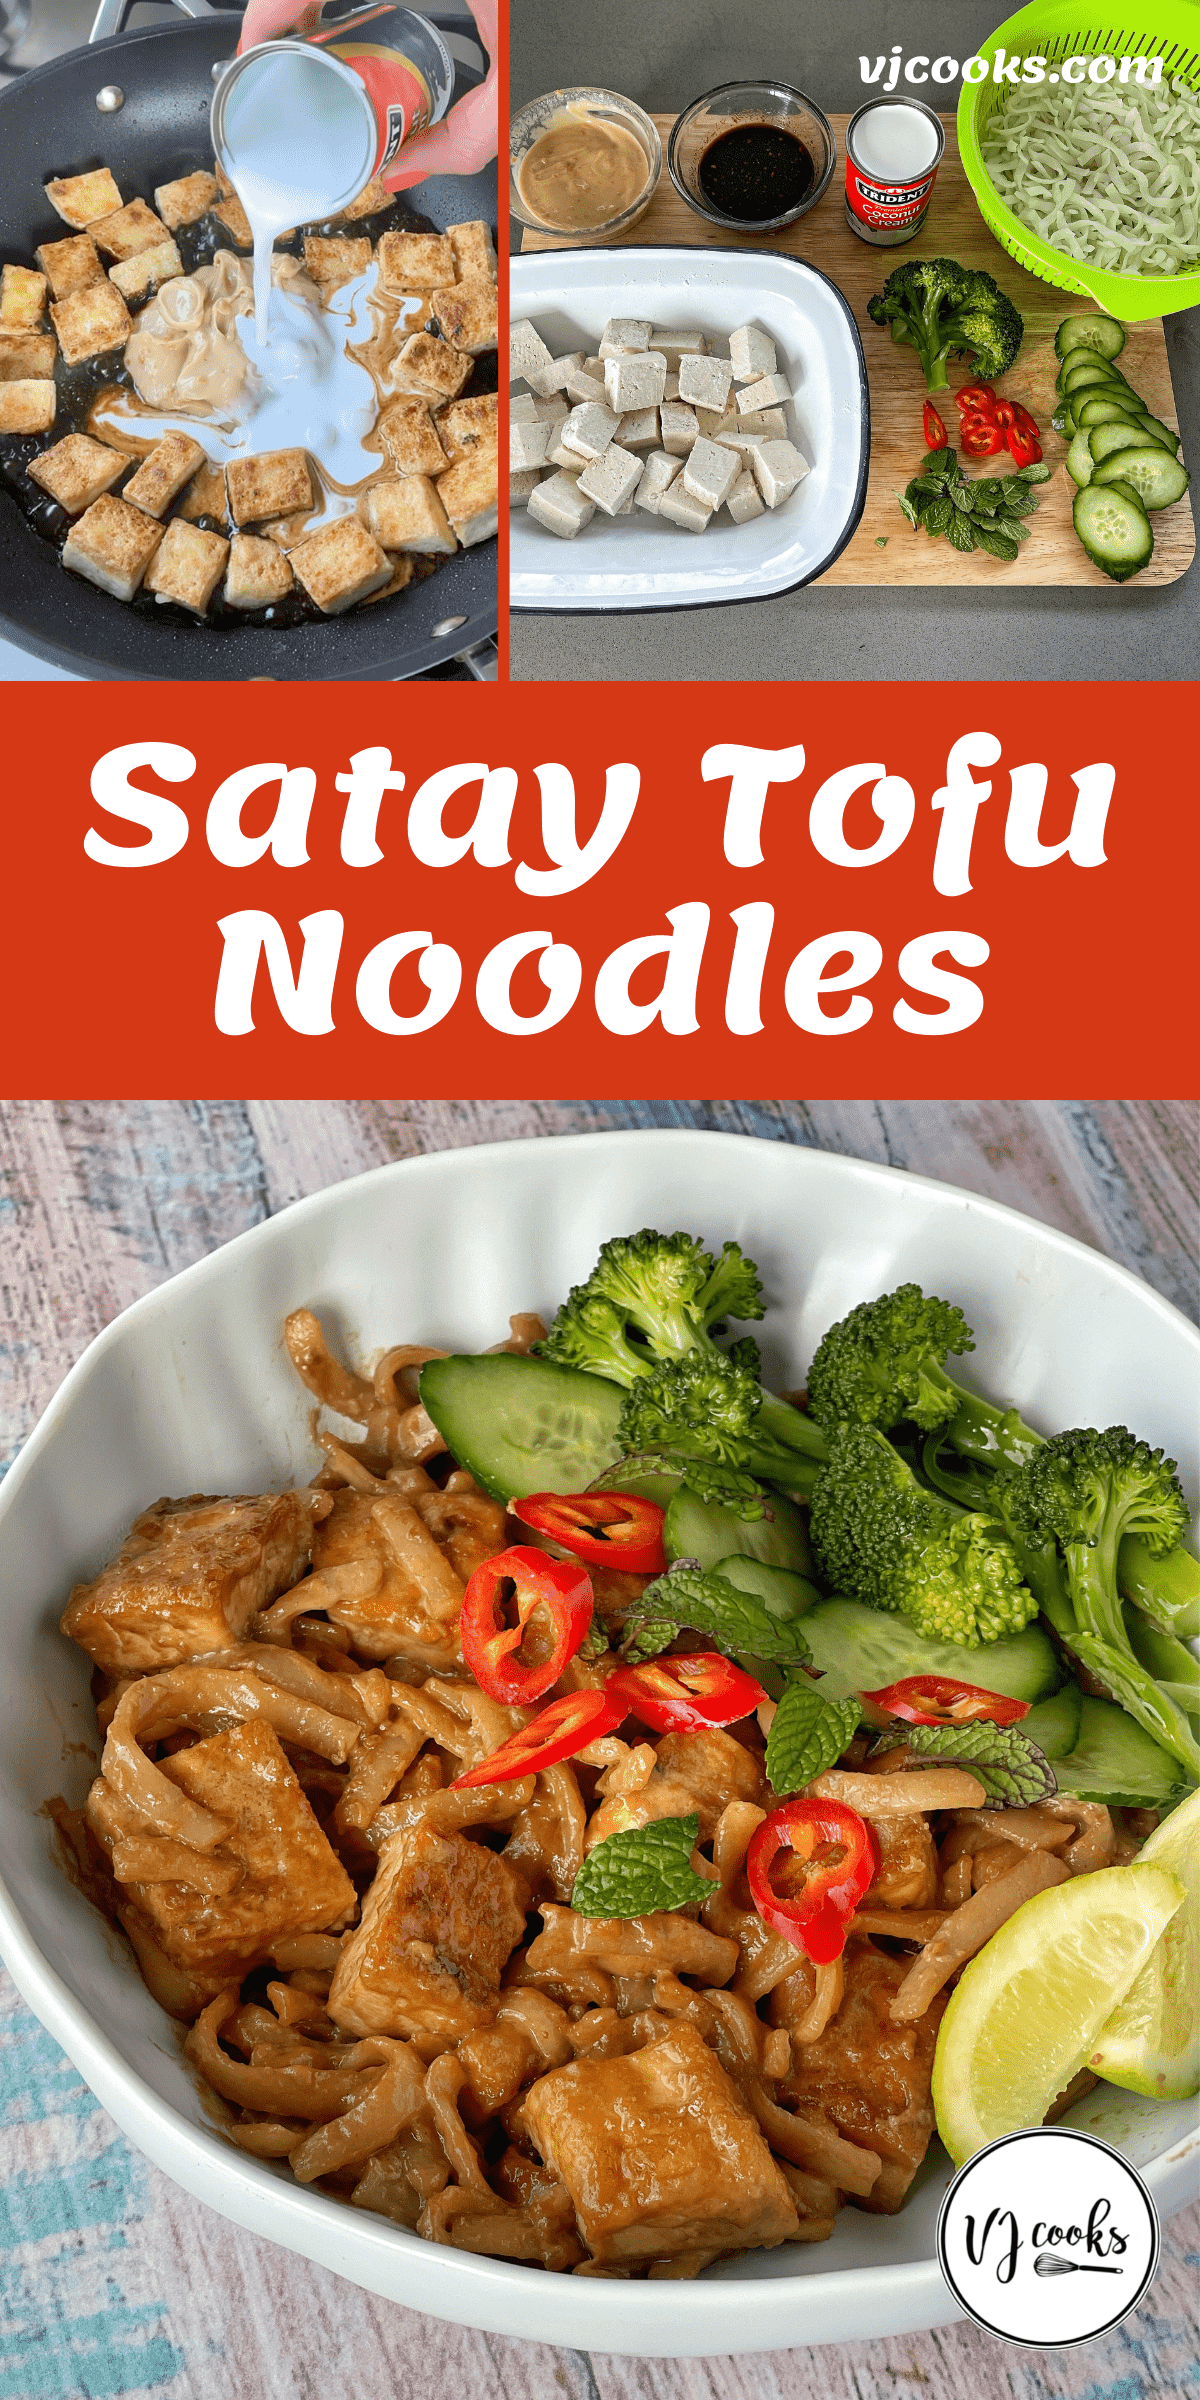 The process of making Satay Tofu Noodles